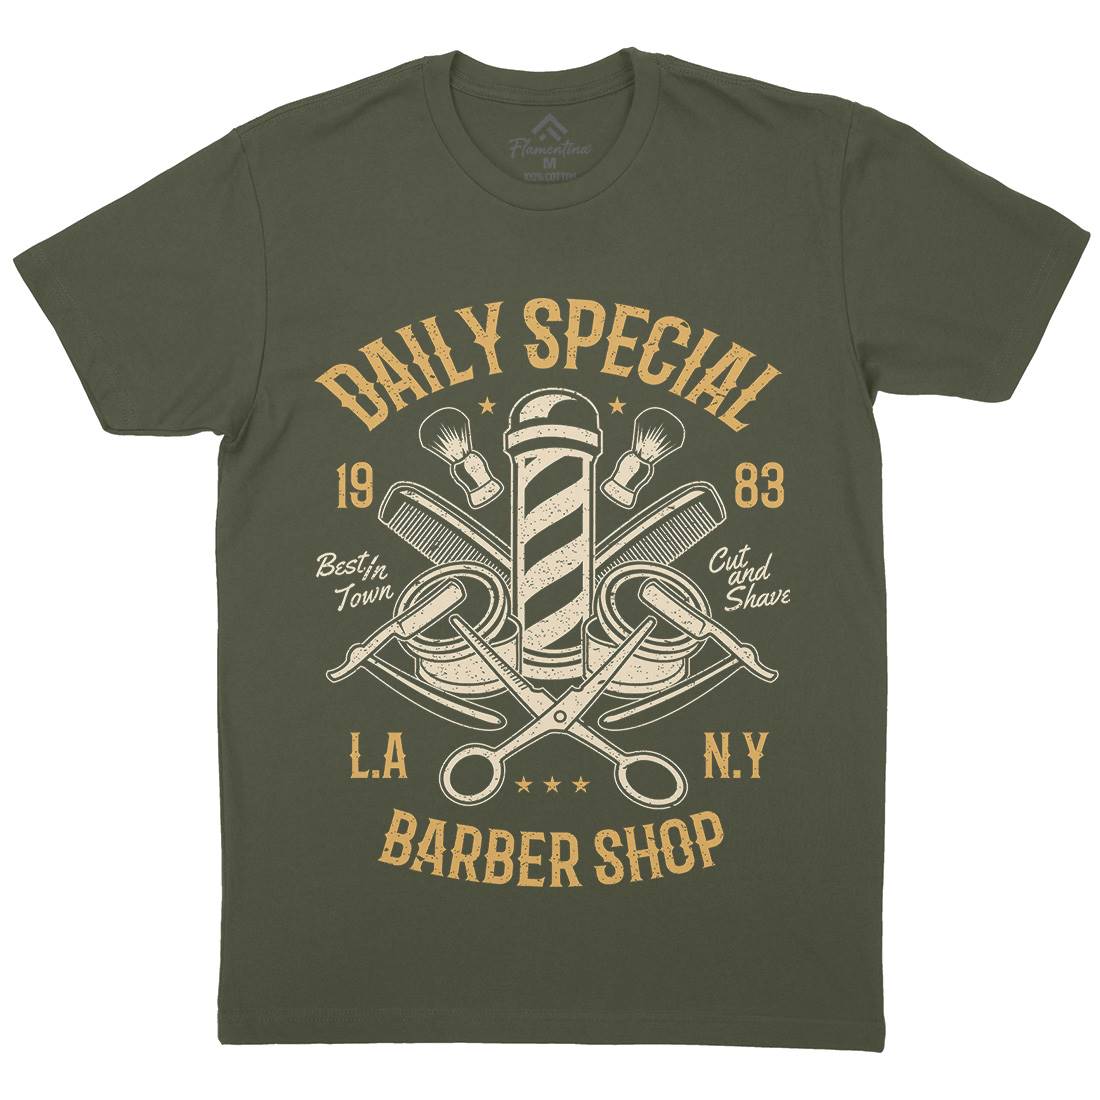 Daily Special Shop Mens Organic Crew Neck T-Shirt Barber A041